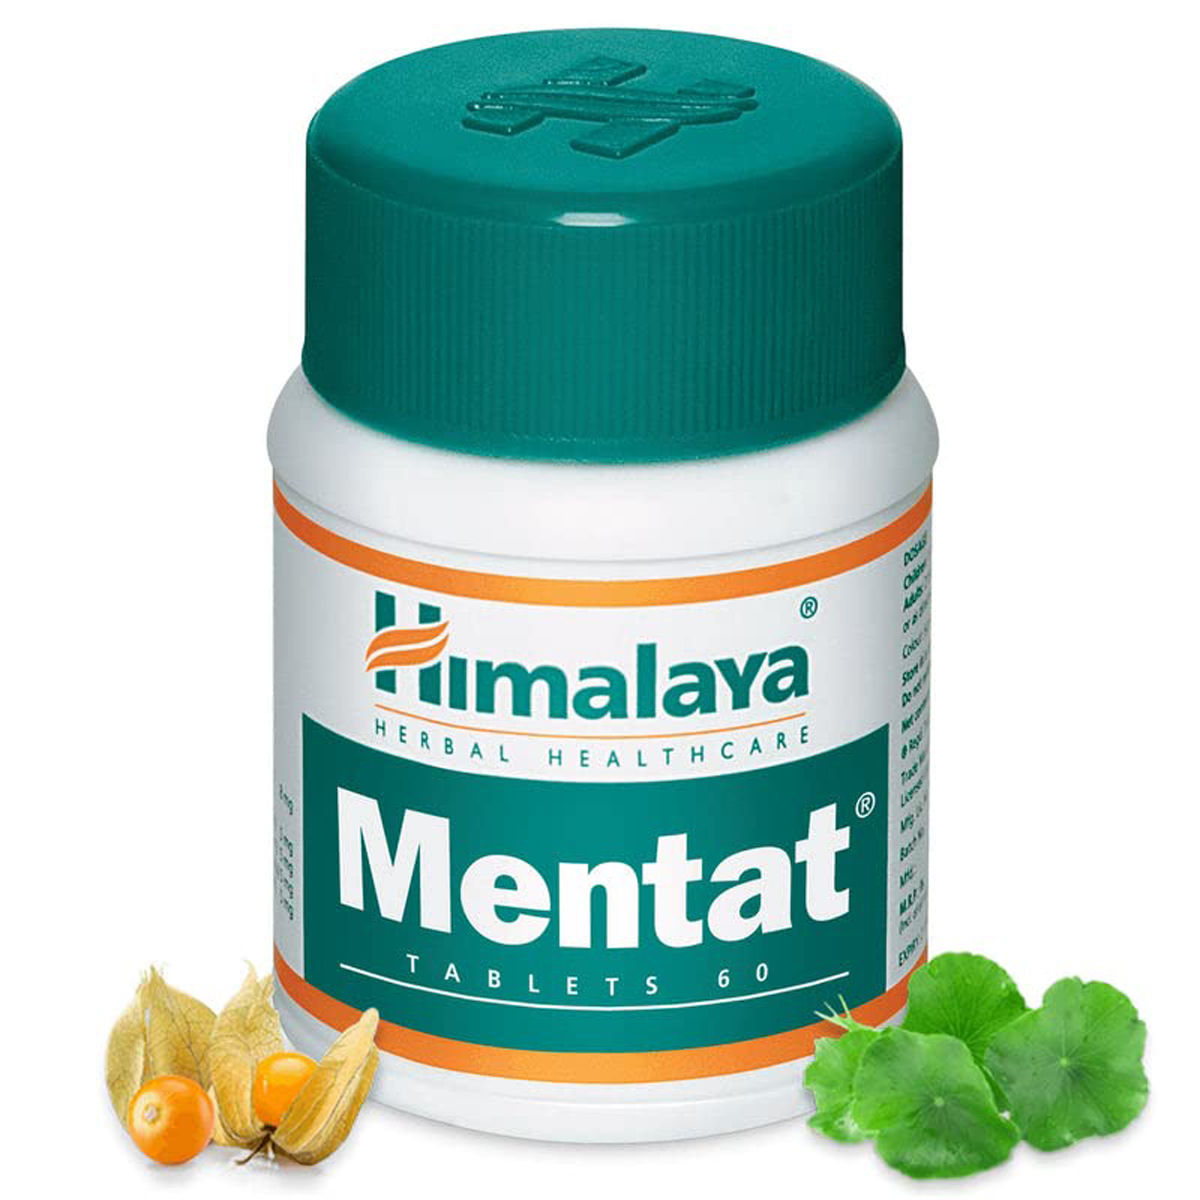 Himalaya Mentat, 60 Tablets, Pack of 1 